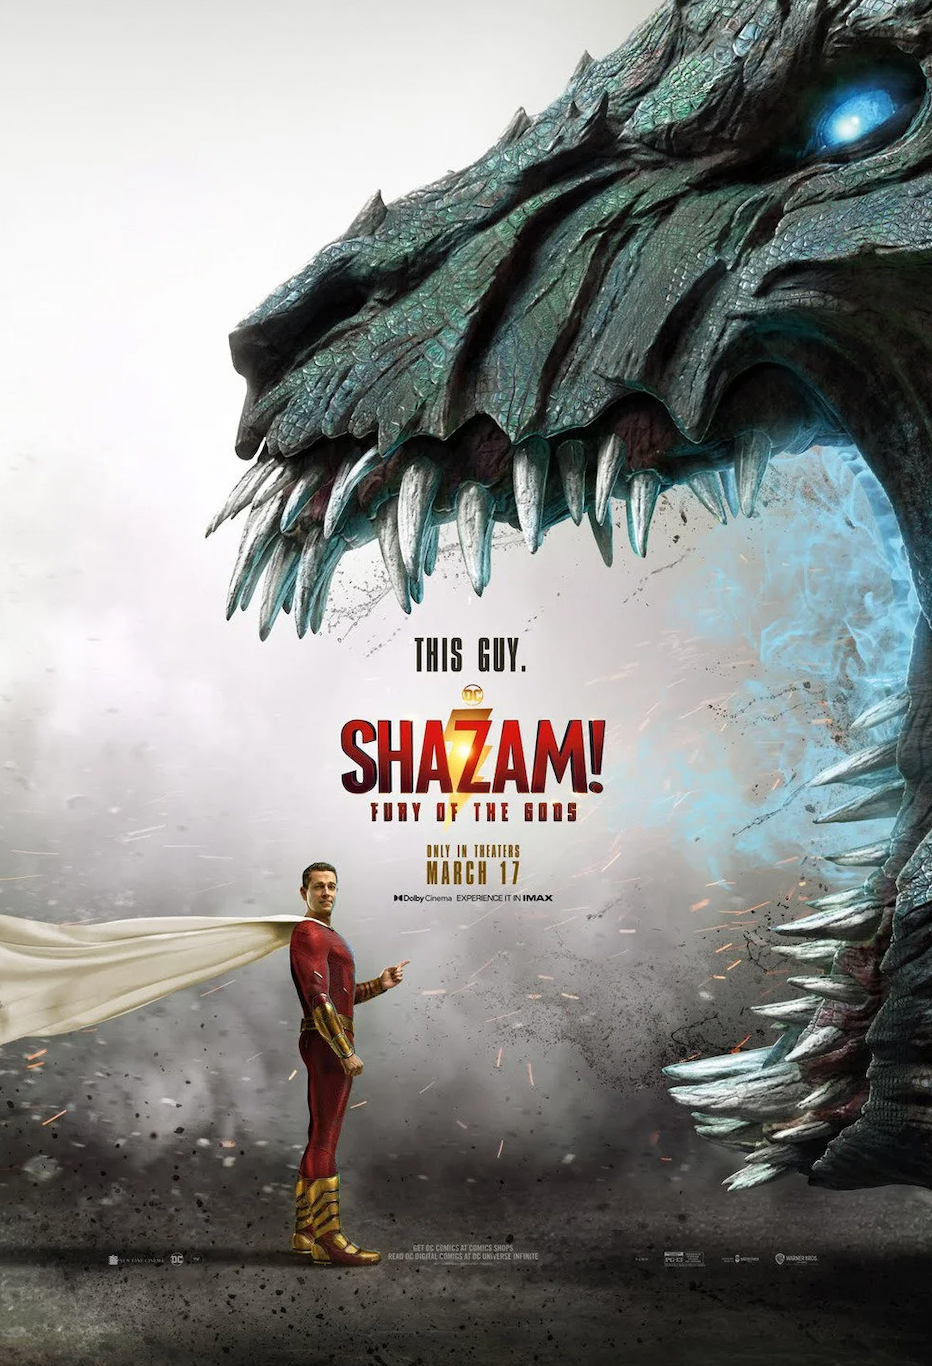 SHAZAM! FURY OF THE GODS – Official Trailer 1 